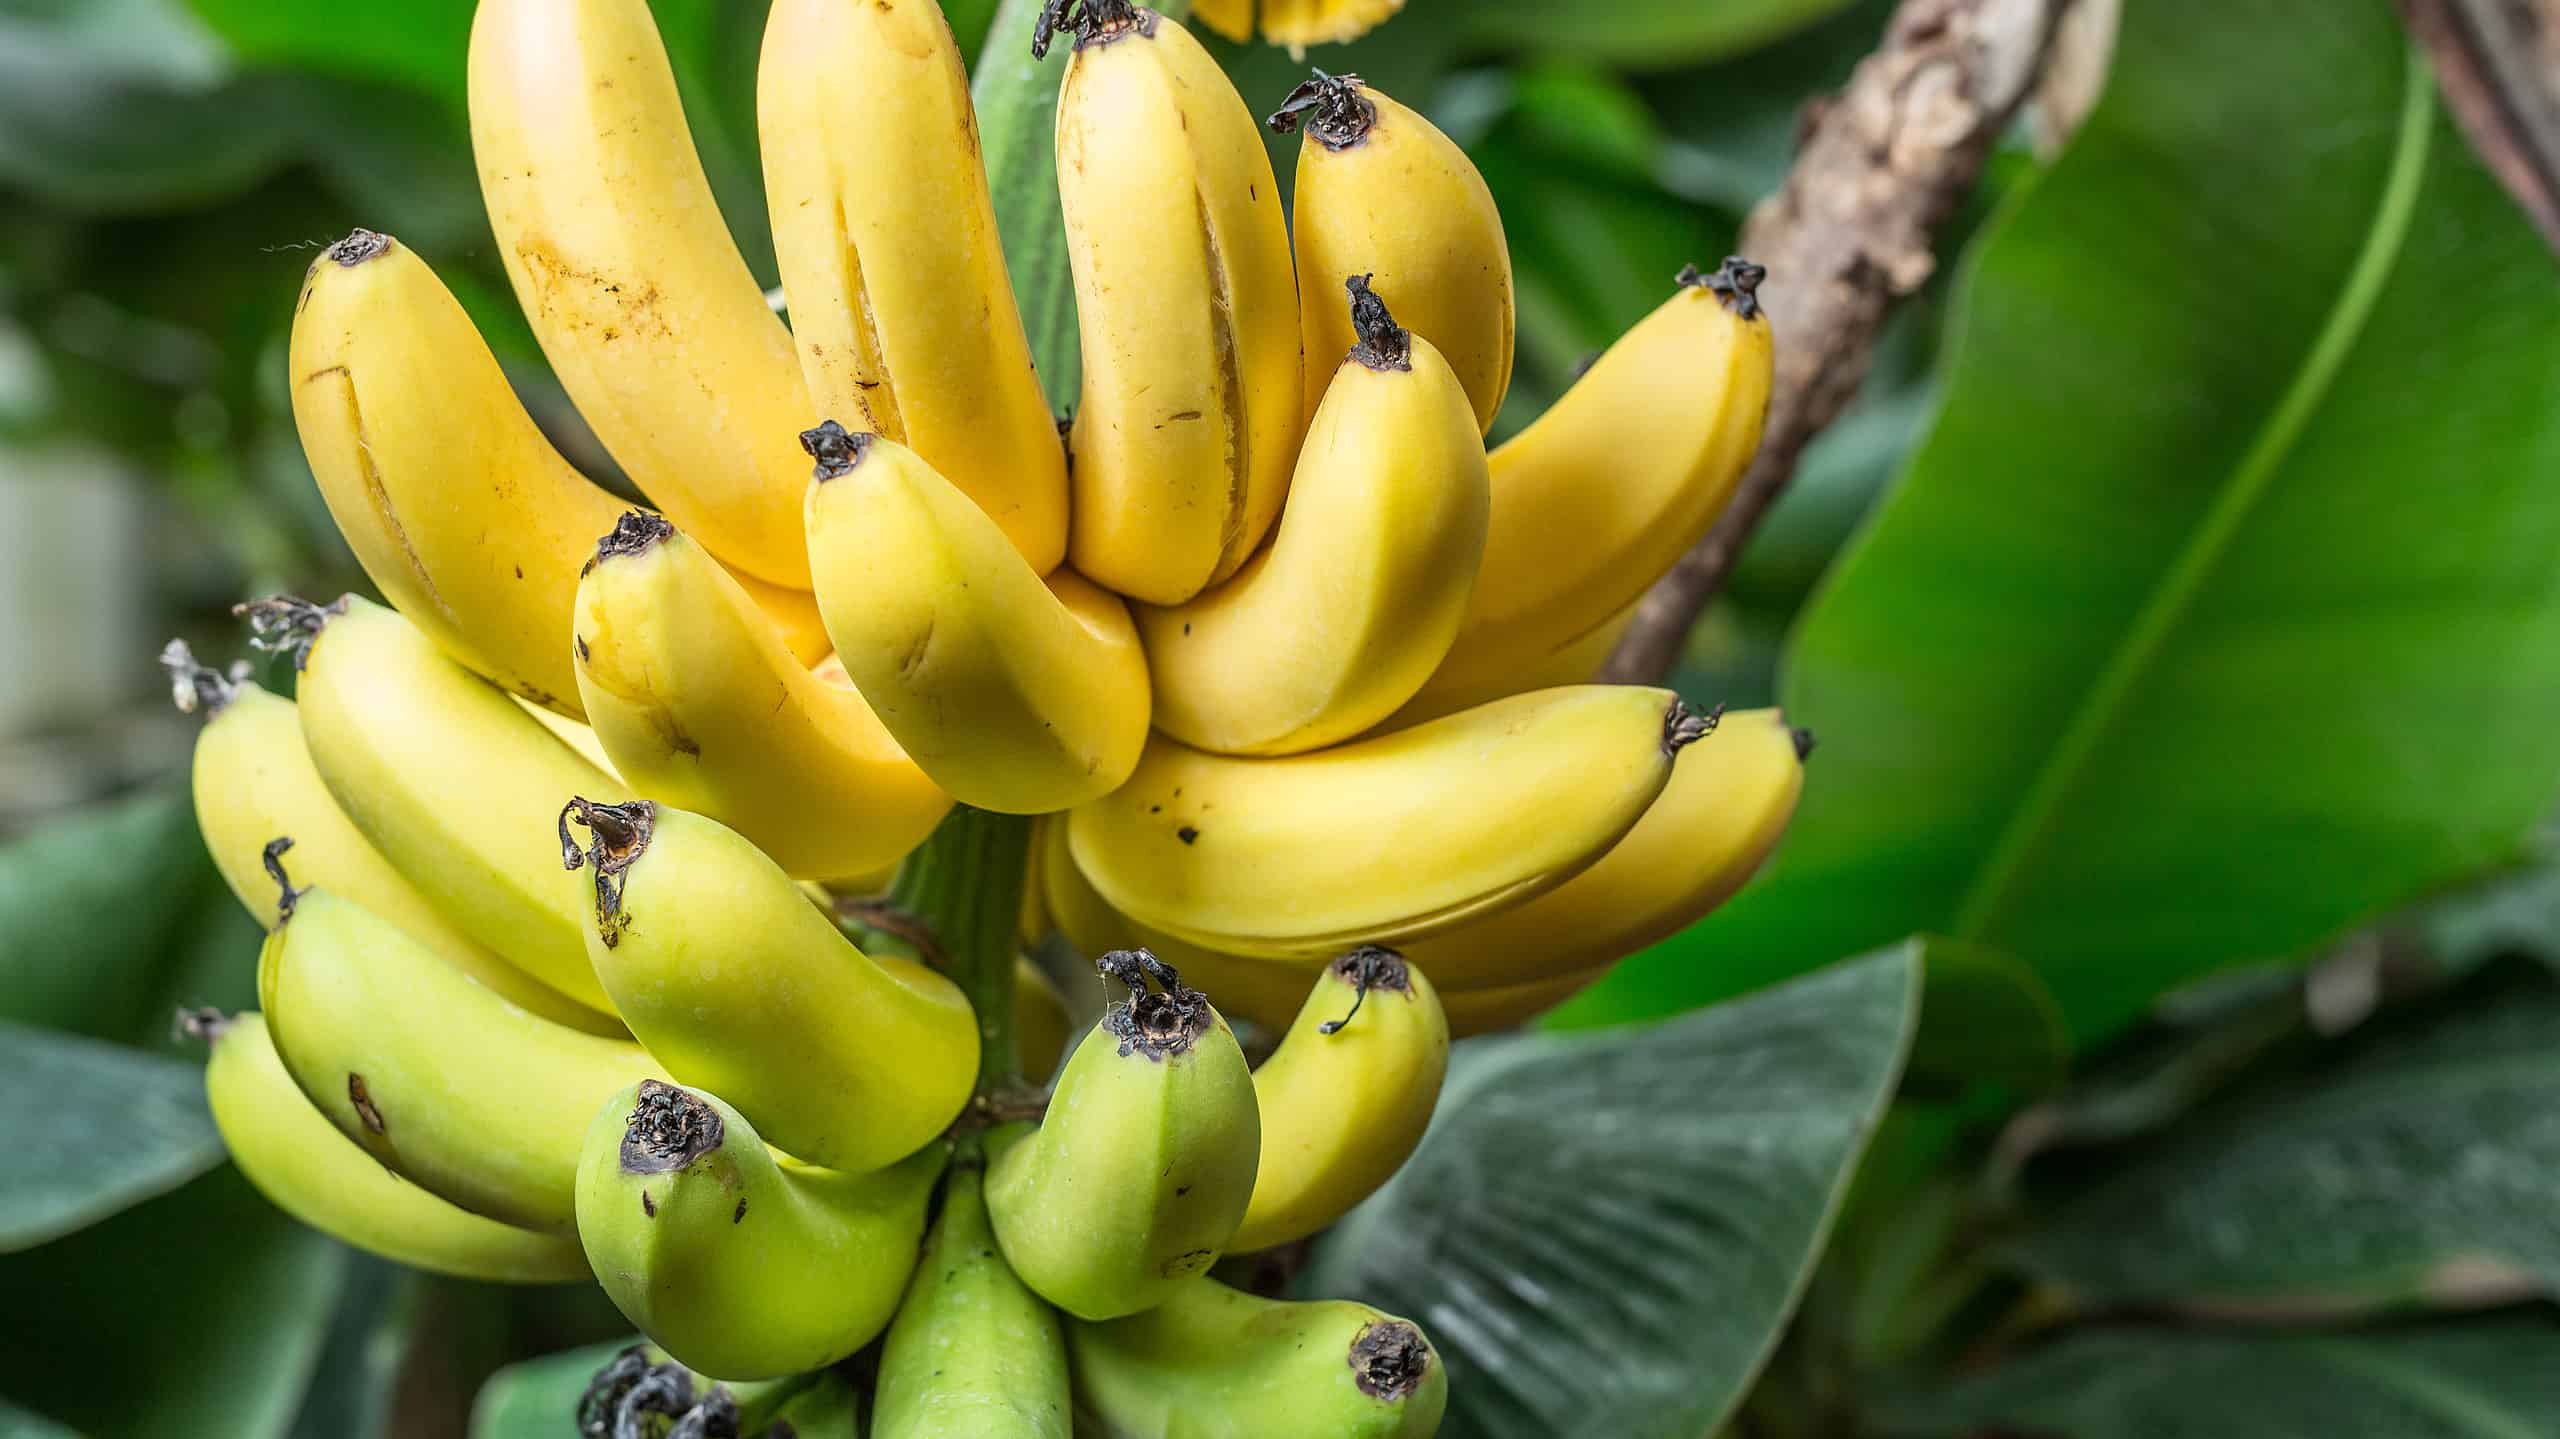 Ripe Bananas on the Palm